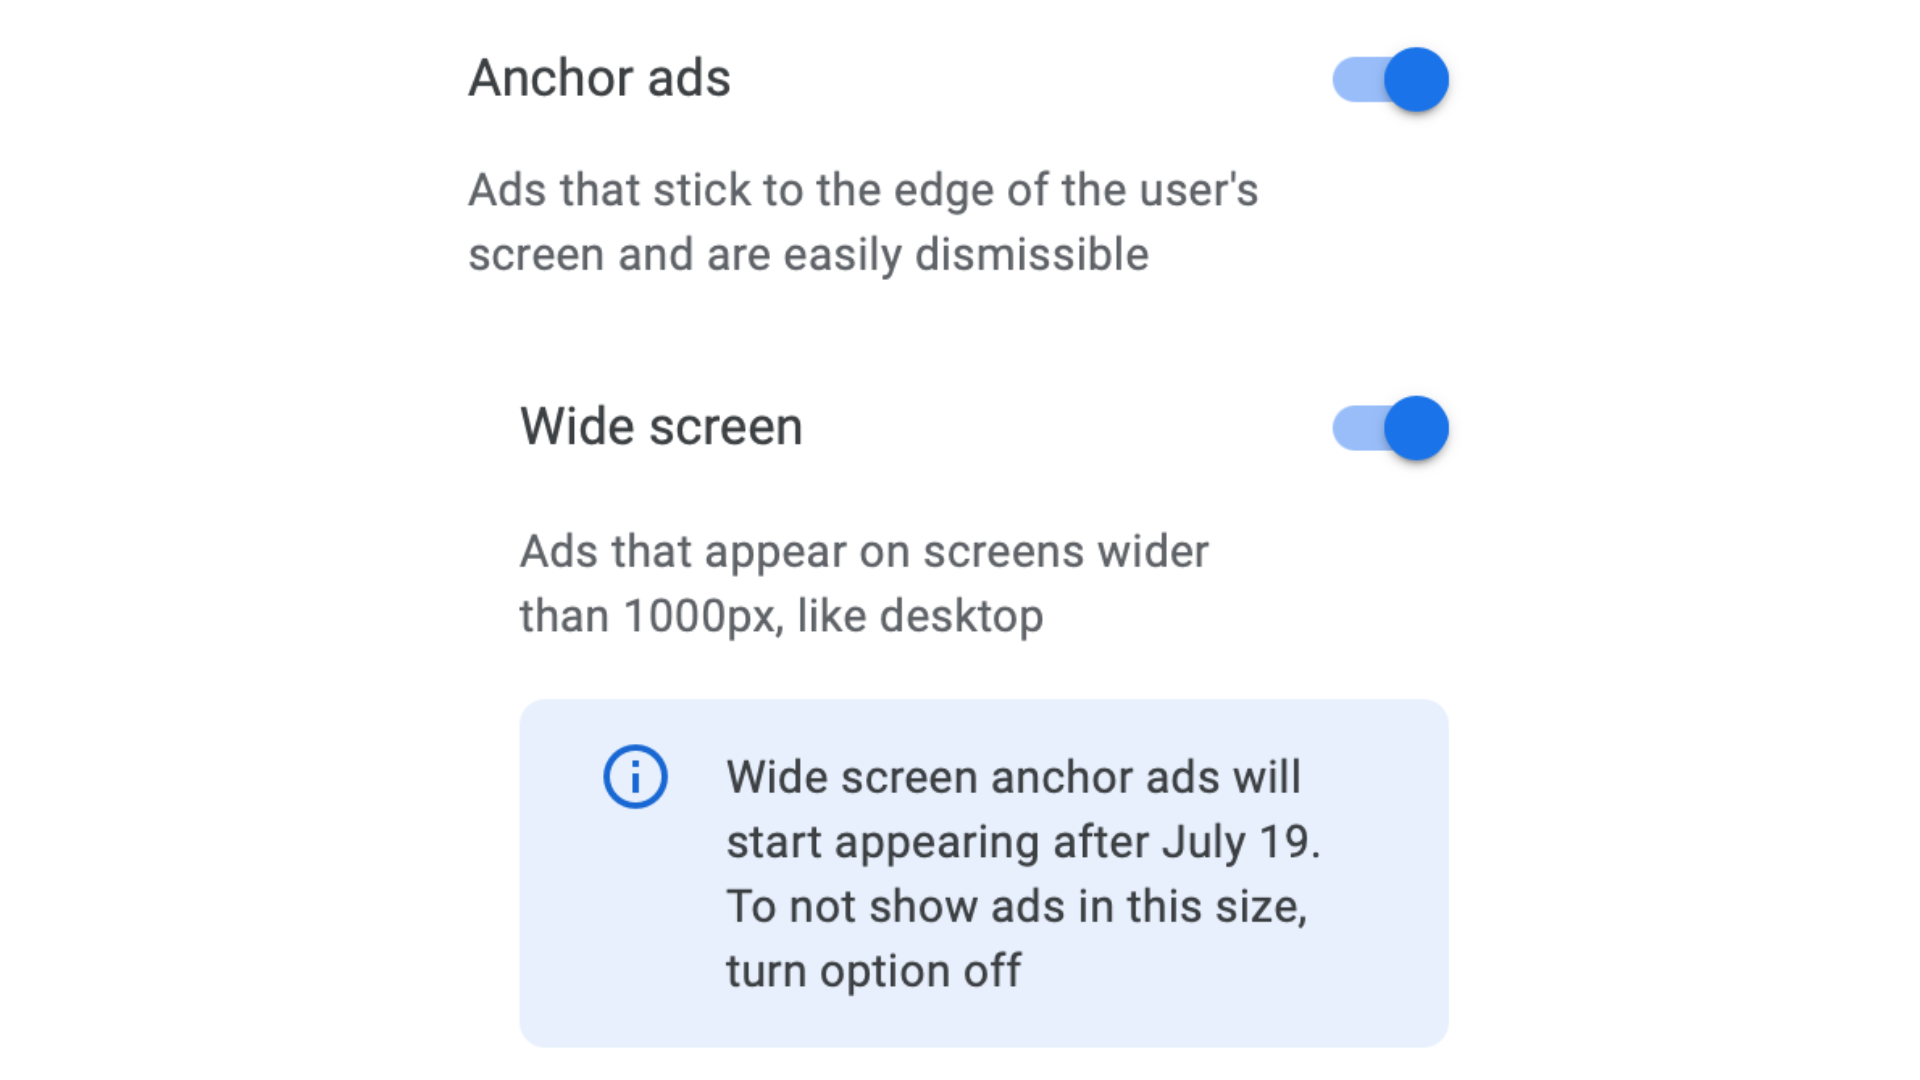 Google to show anchor ads on desktop screens